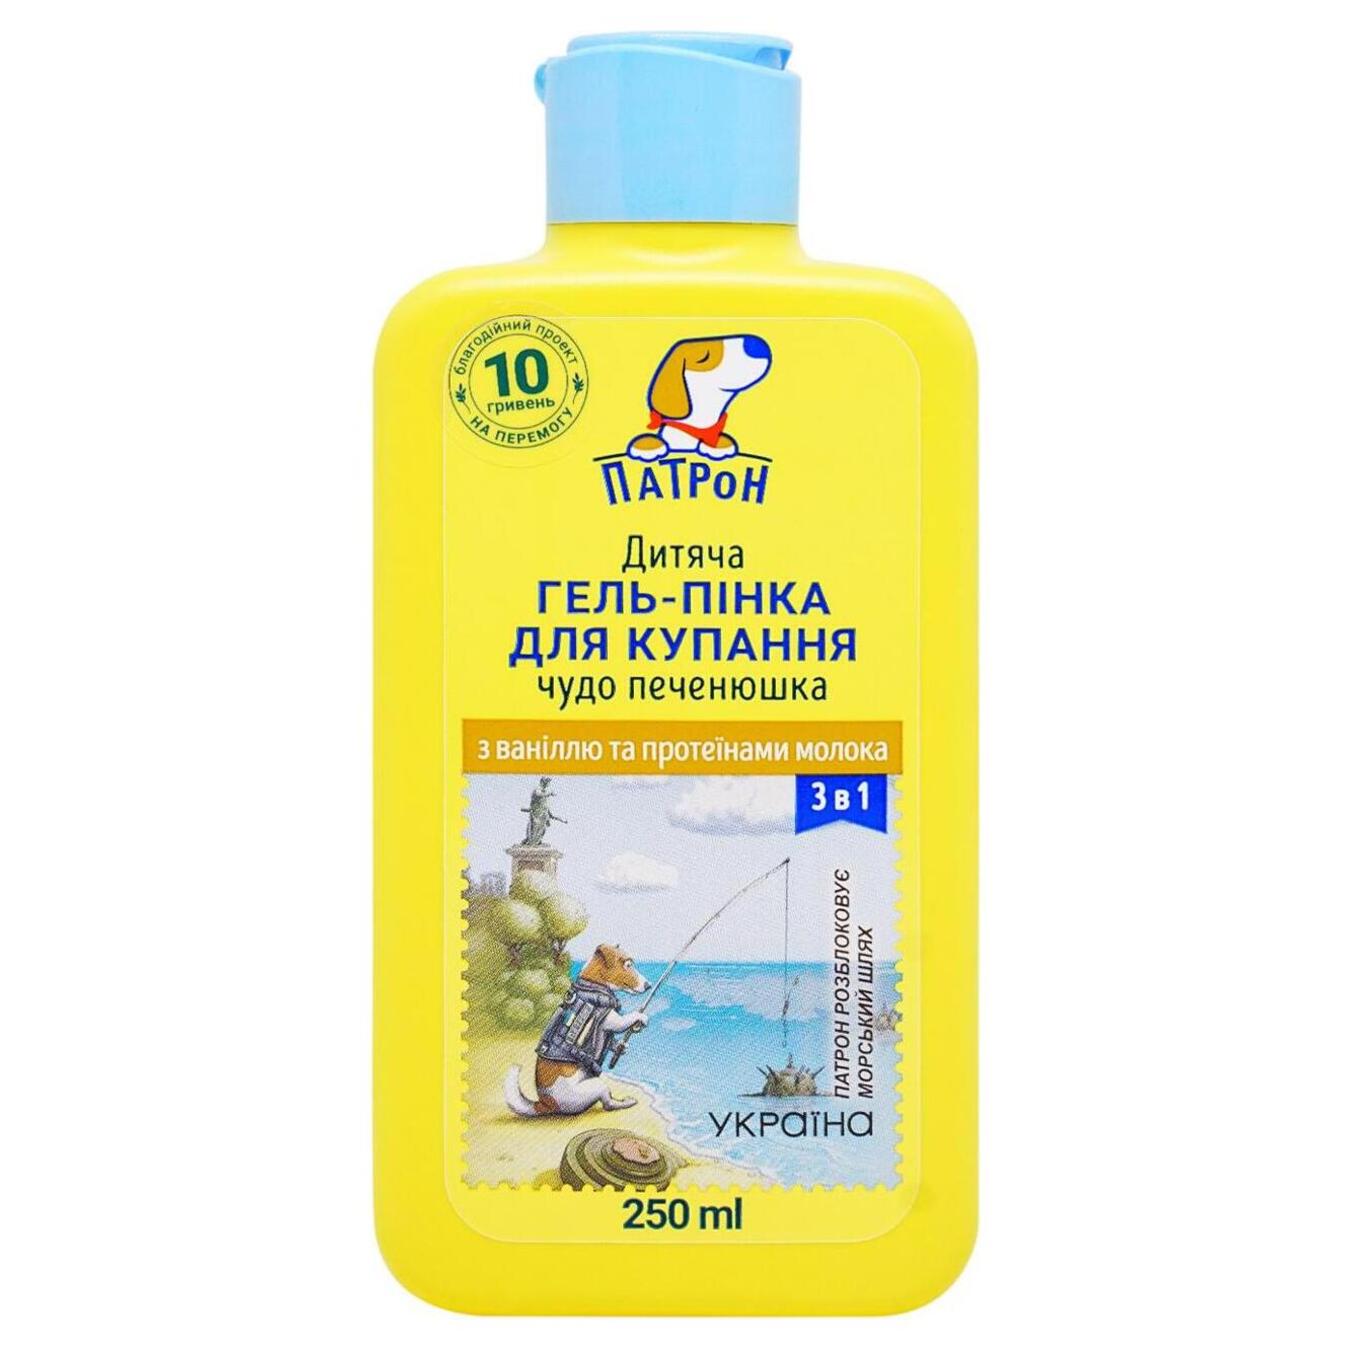 Children's gel-foam Pes Patron for bathing 3 in 1 miracle pechenyushka 250 ml